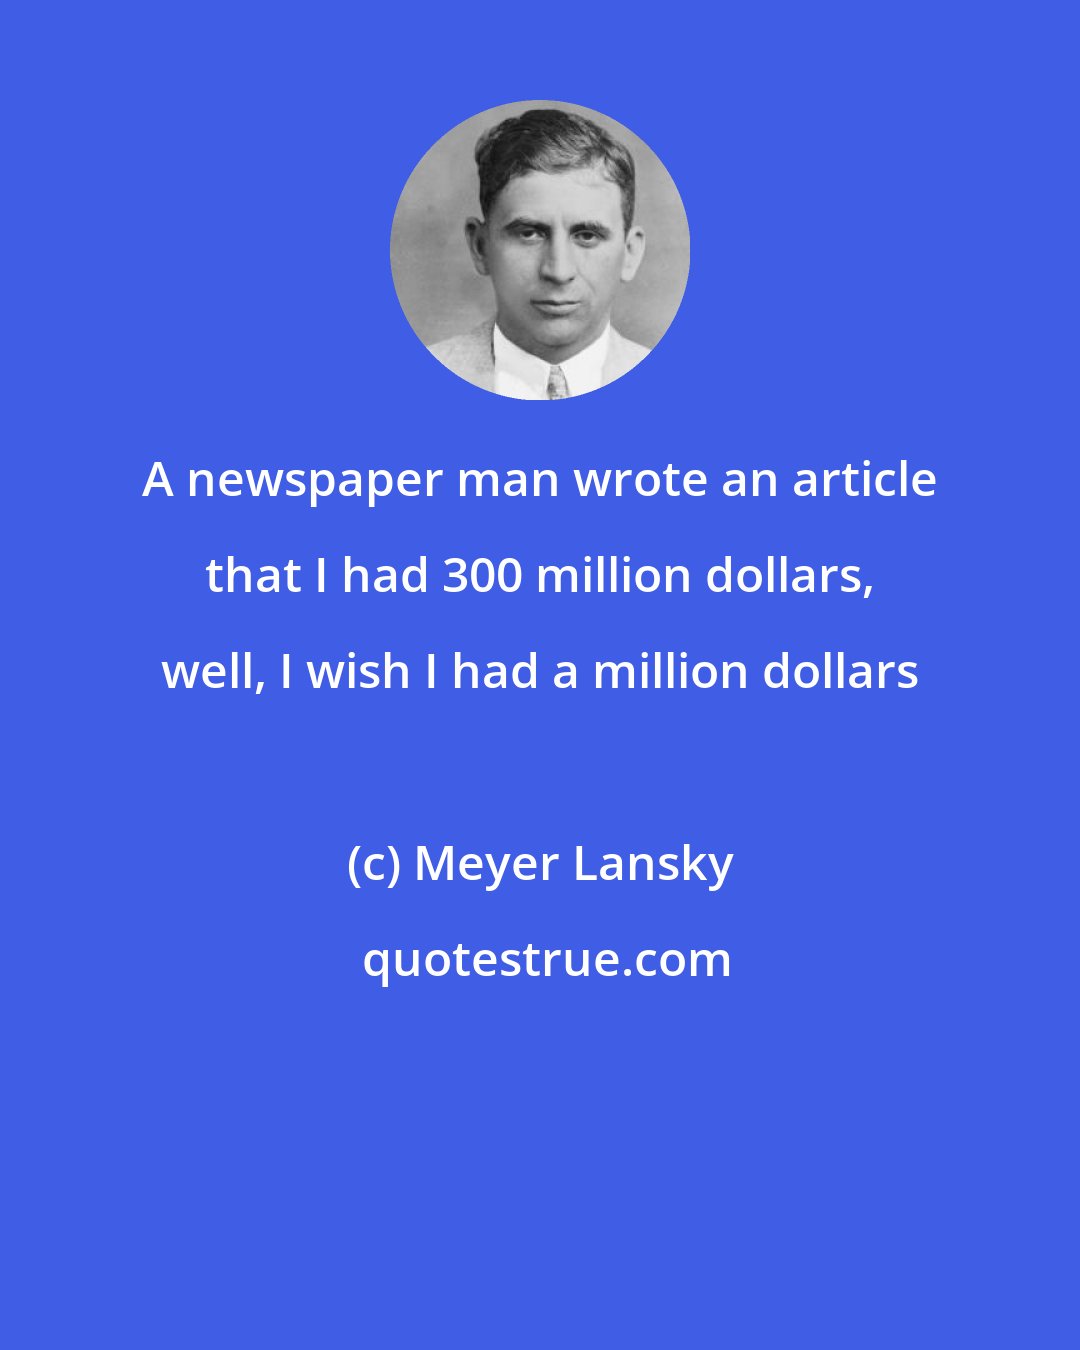 Meyer Lansky: A newspaper man wrote an article that I had 300 million dollars, well, I wish I had a million dollars